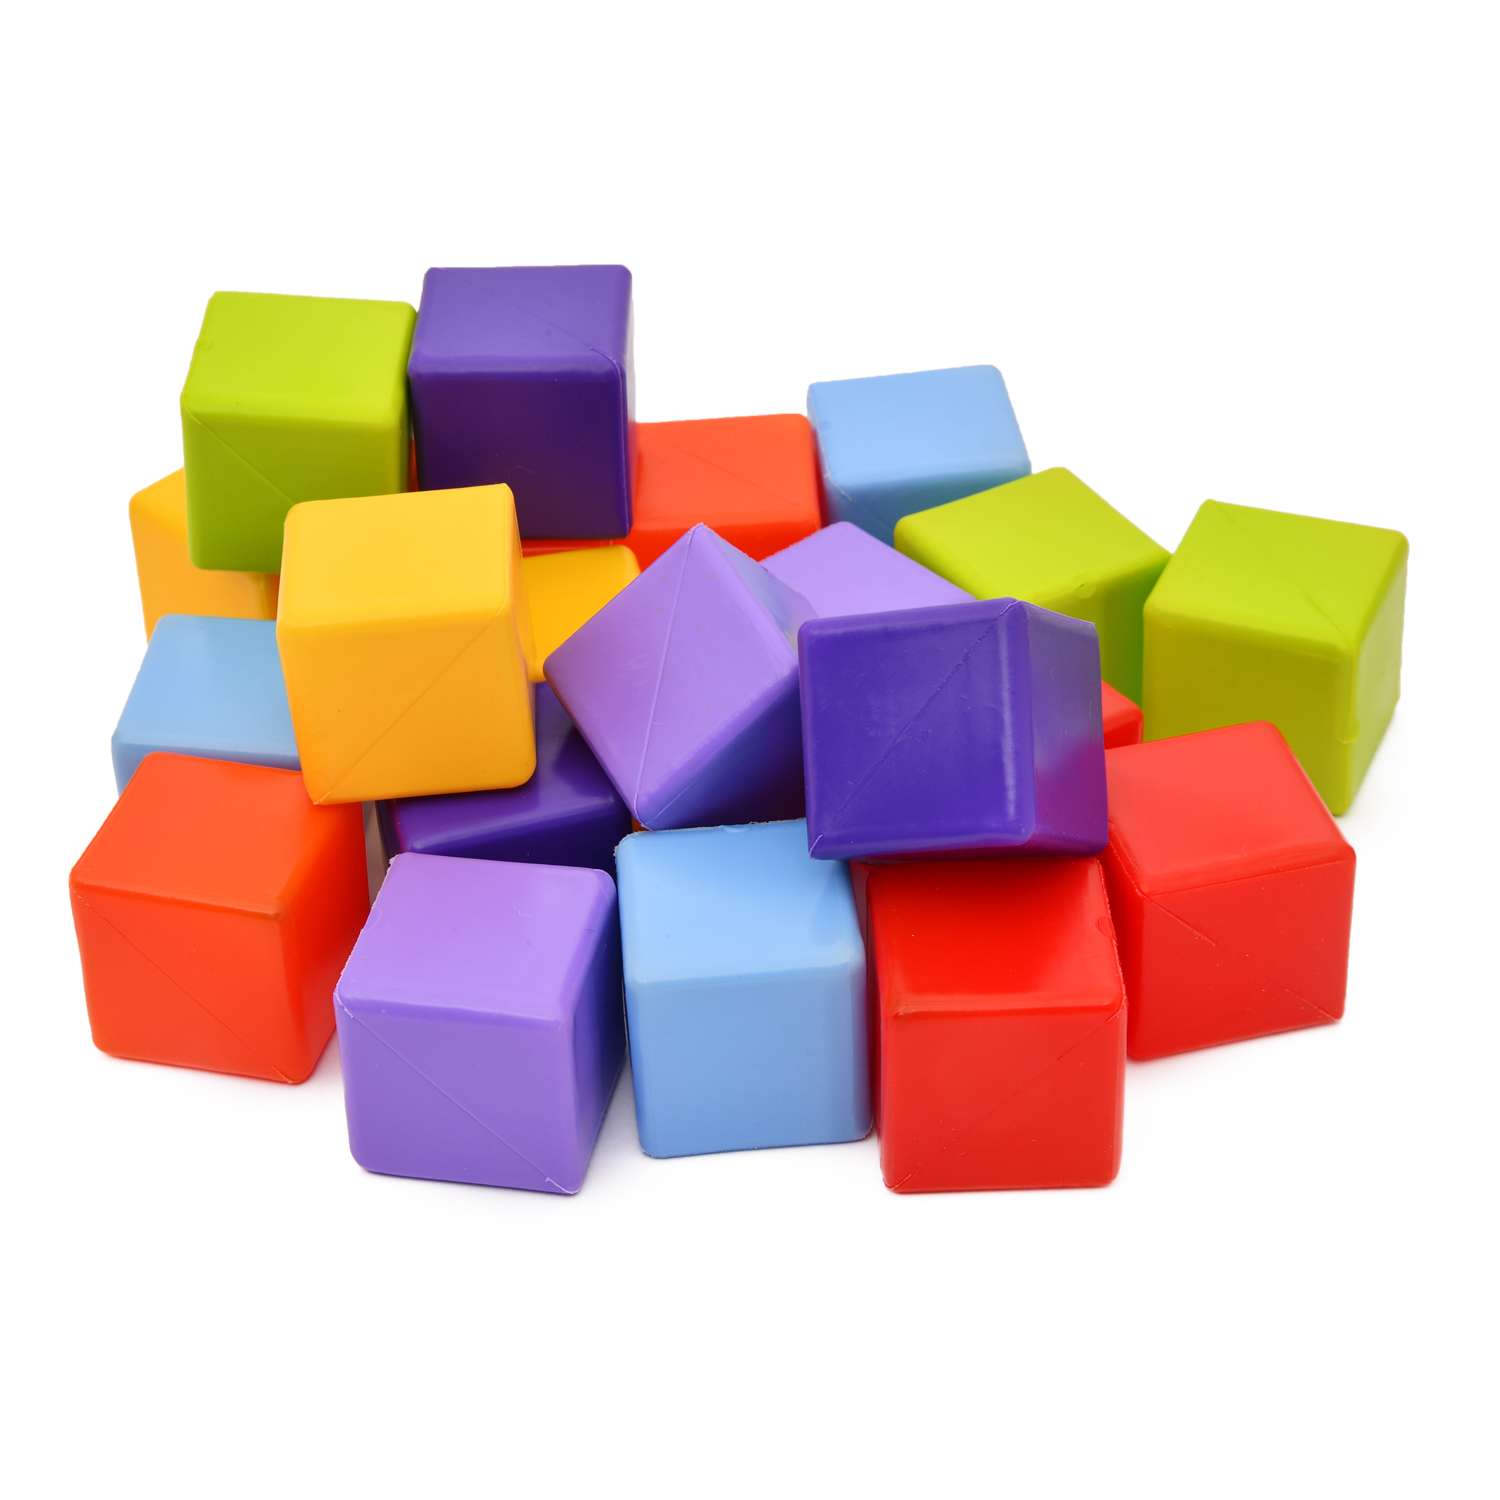 Покажи картинку кубики. Детские кубики. Пирамидка-кубики. Кубики пластмассовые. Кубики игрушки для детей.